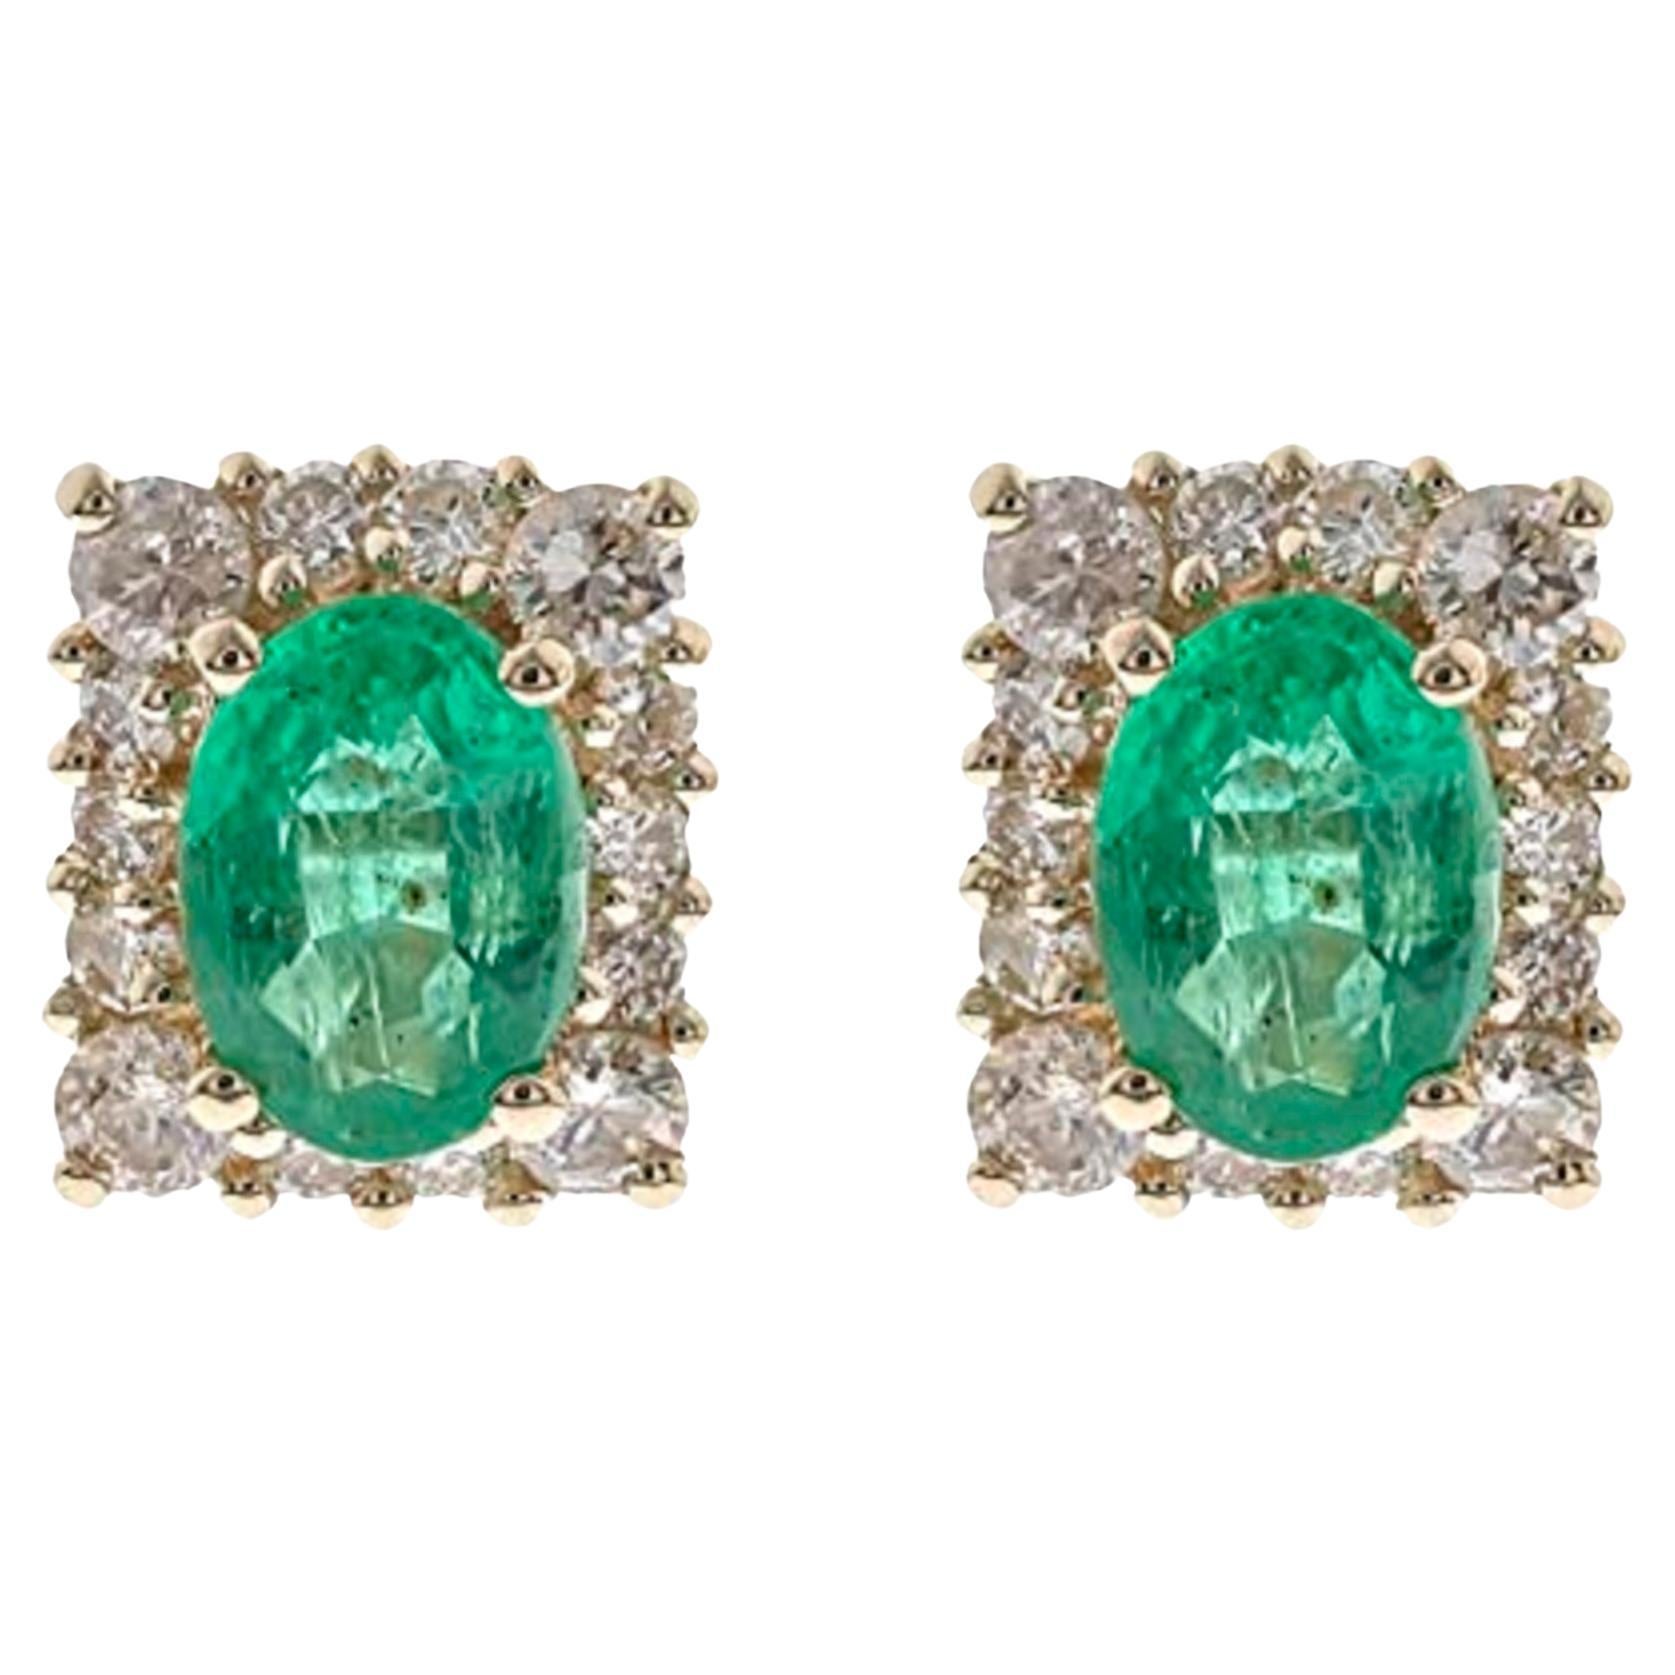  Gin & Grace 14K Yellow Gold Natural Zambian Emerald Stud Earrings with Diamonds